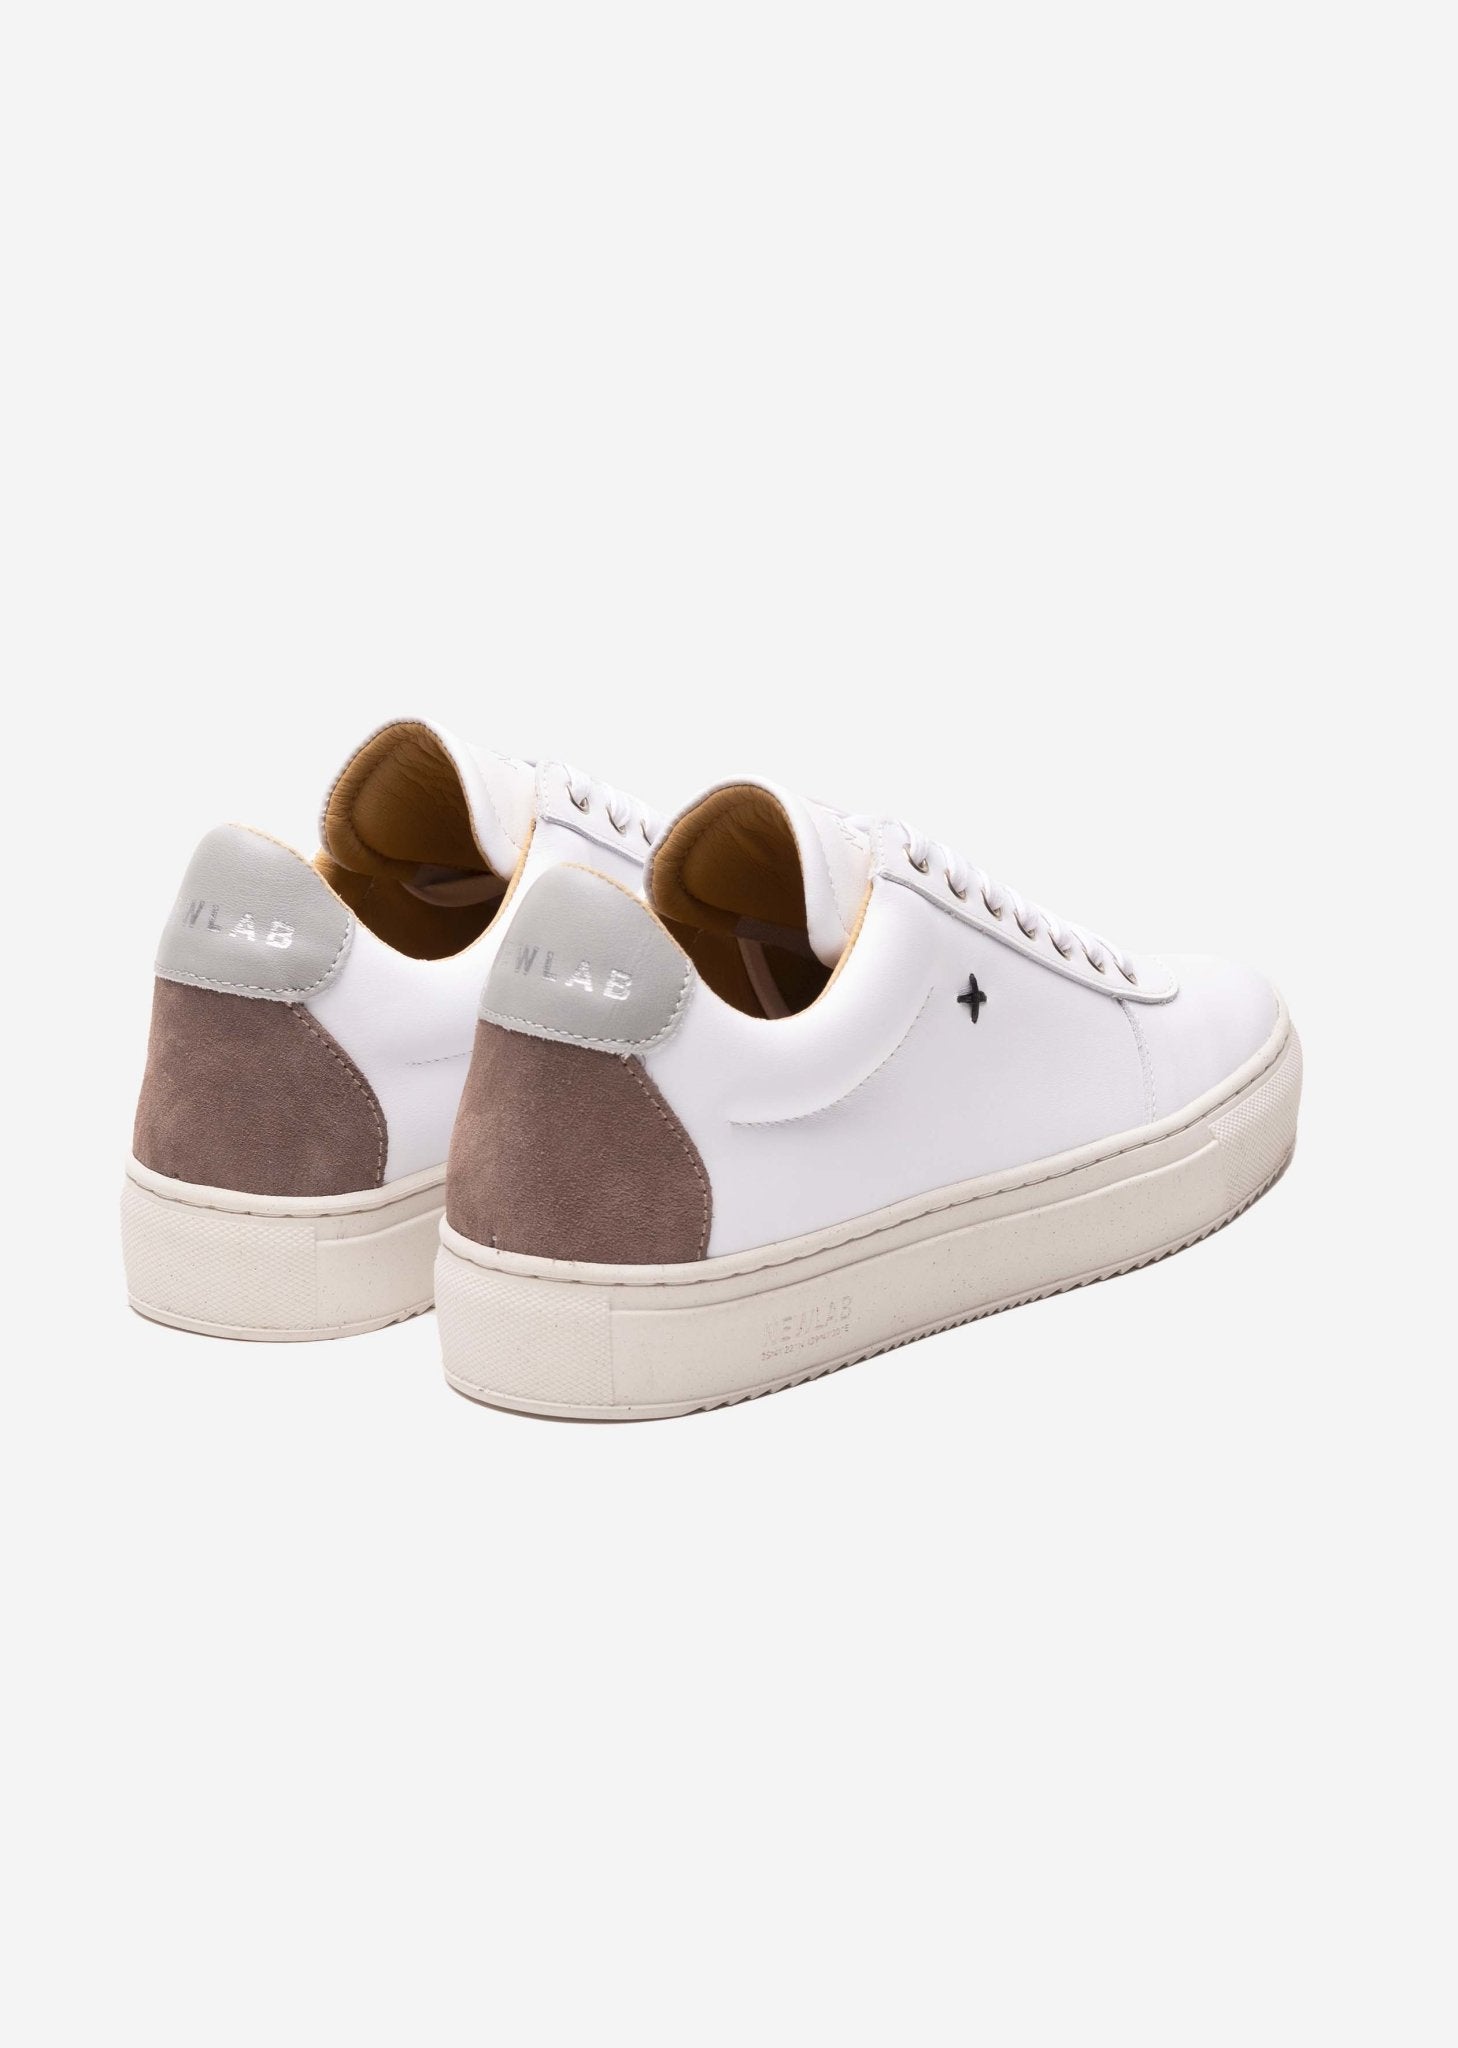 NL06 White/Grey - NEWLAB - Chaussures - NEWLAB